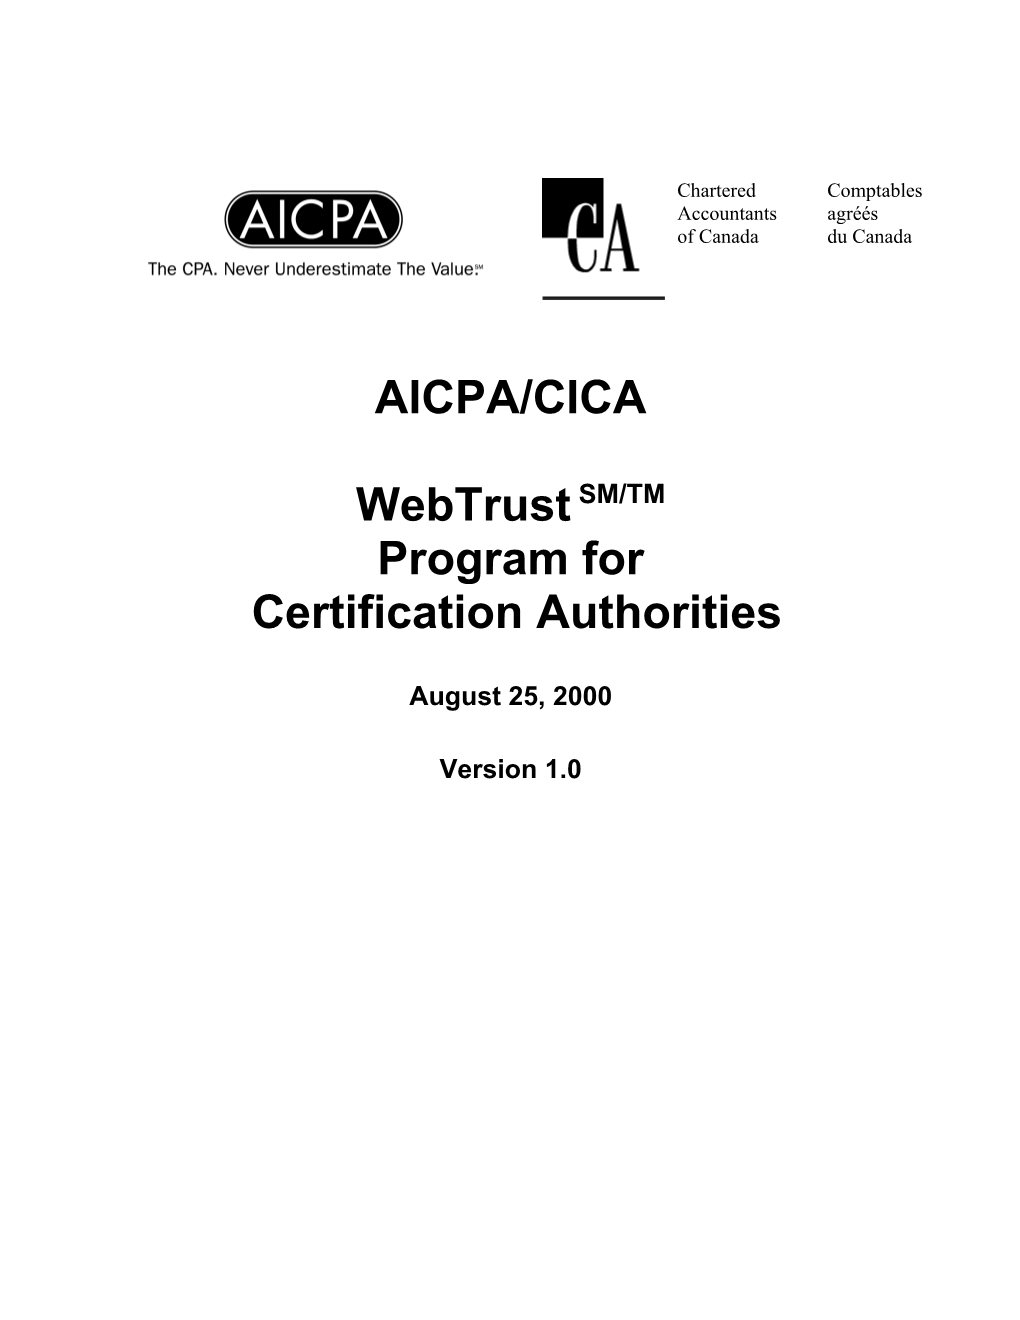 AICPA/CICA Catrust